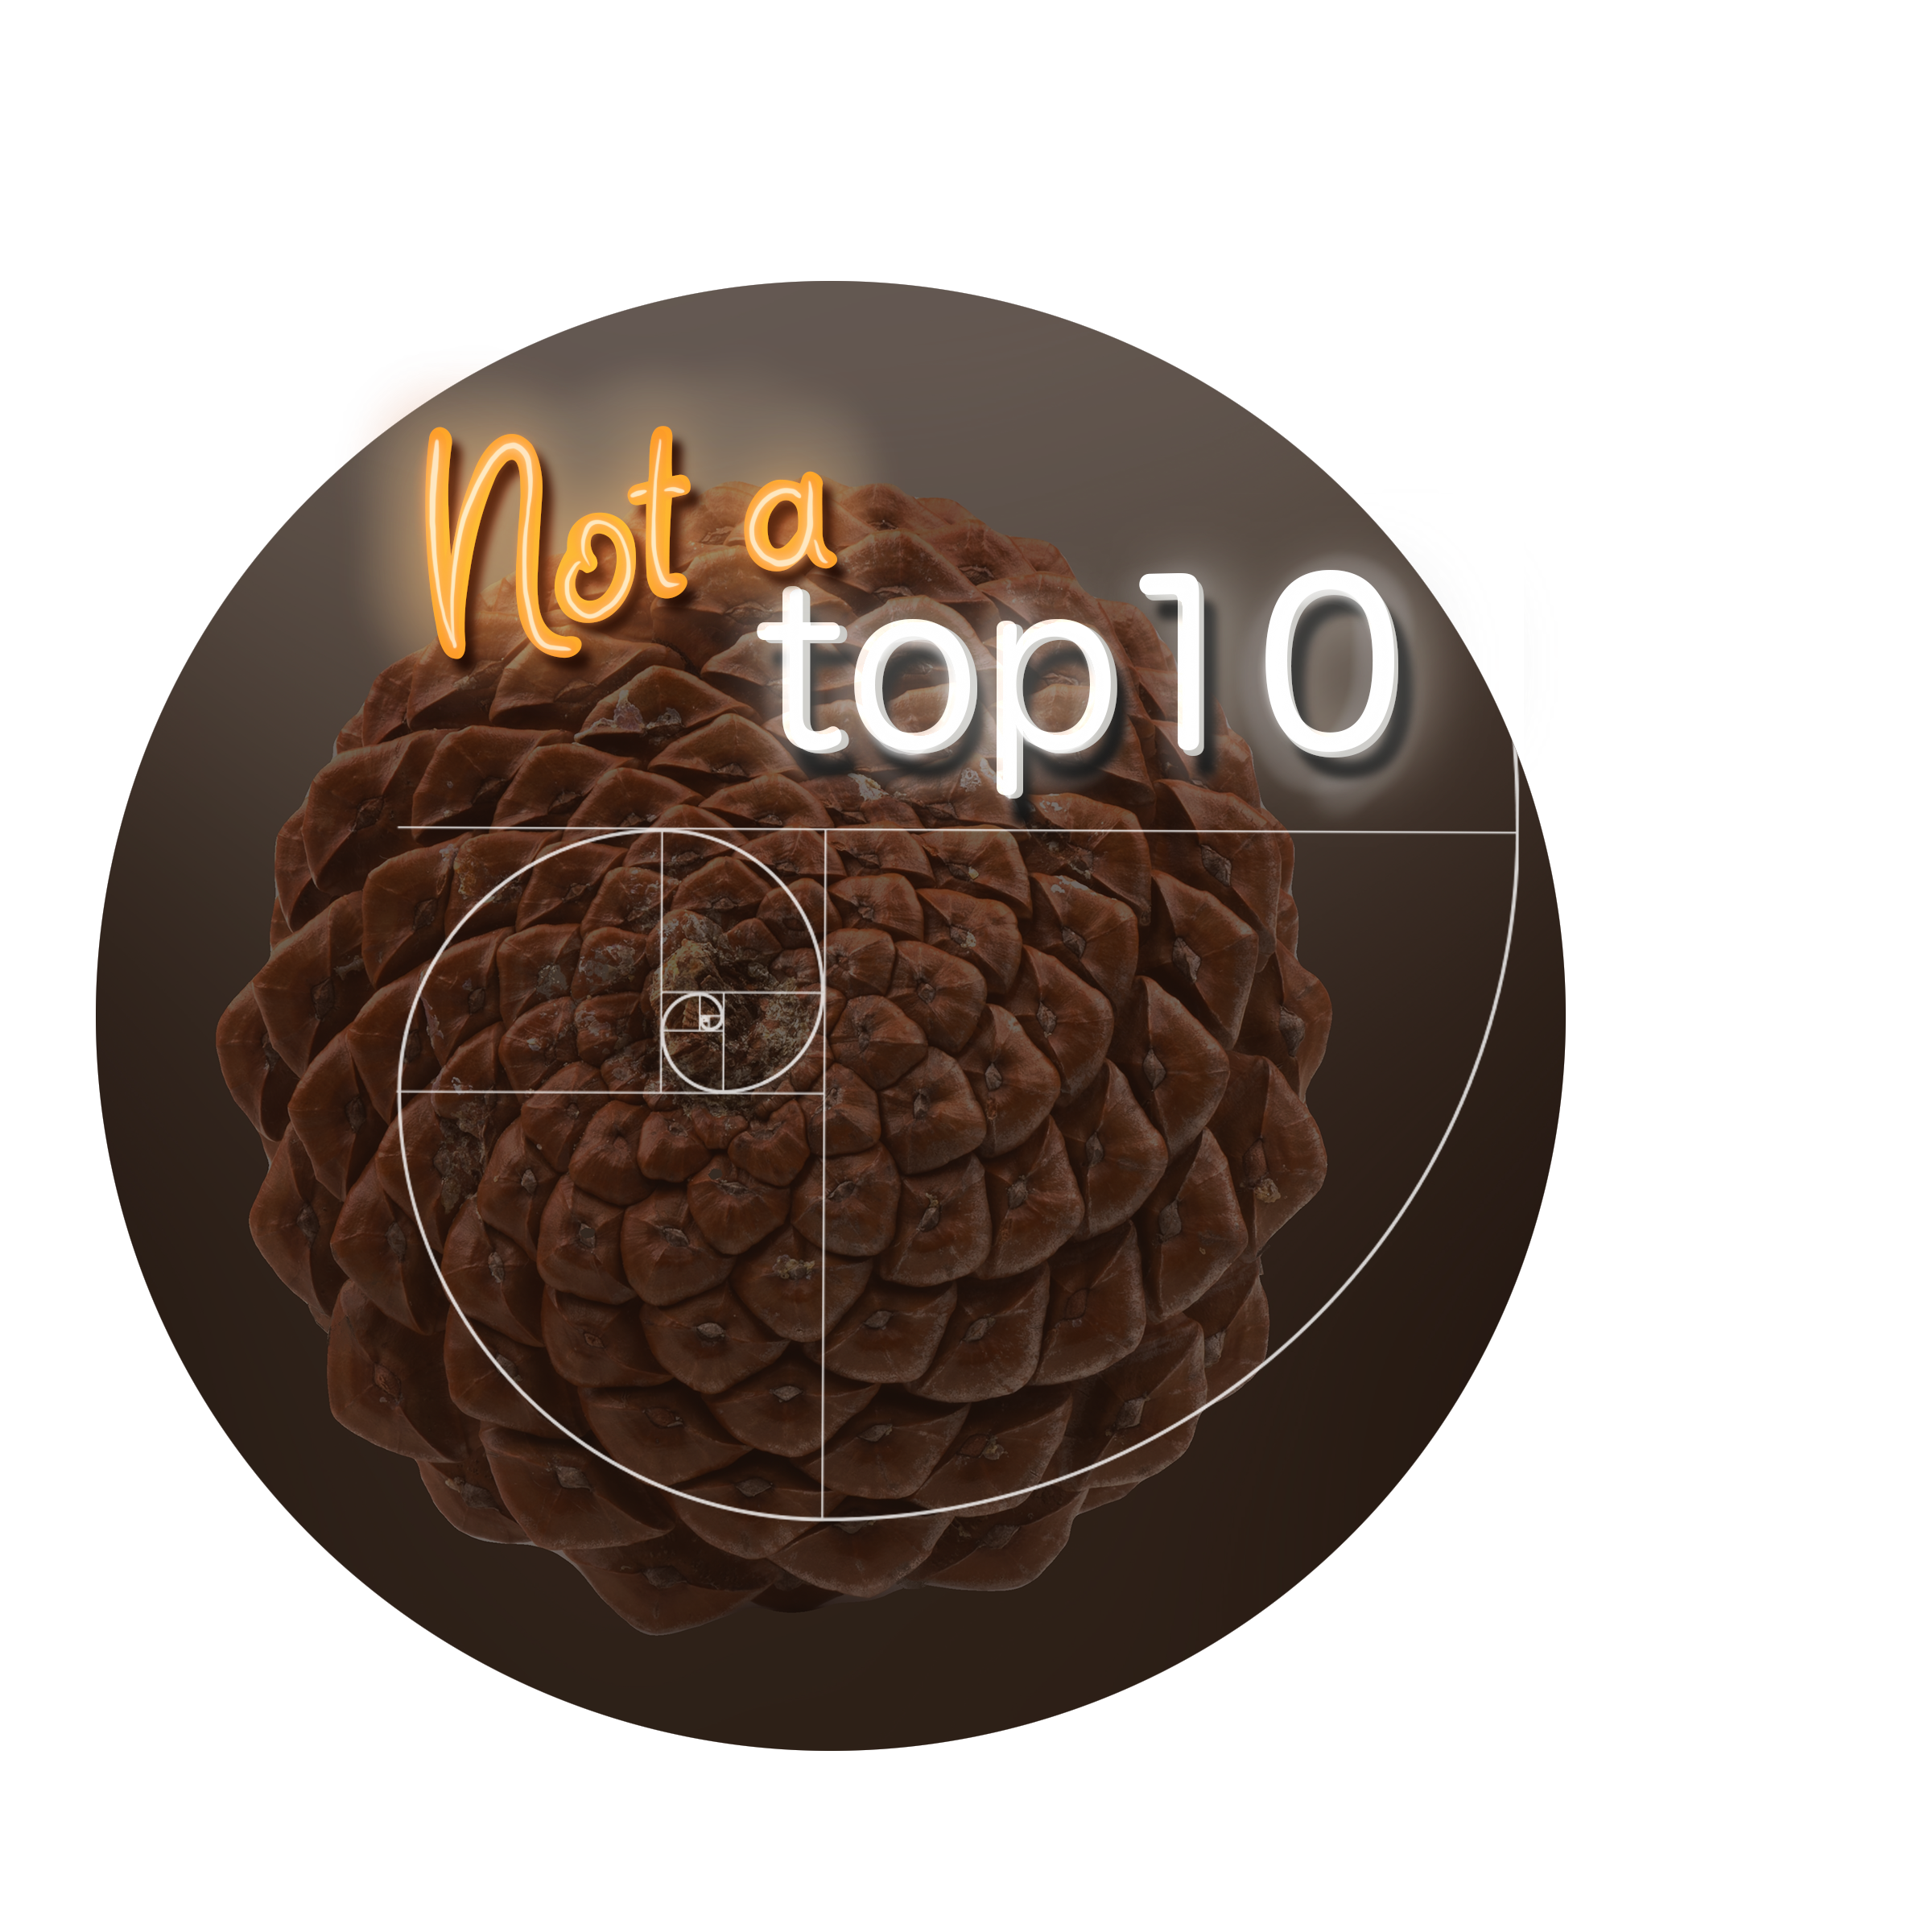 NotaTop10 Podcast logo